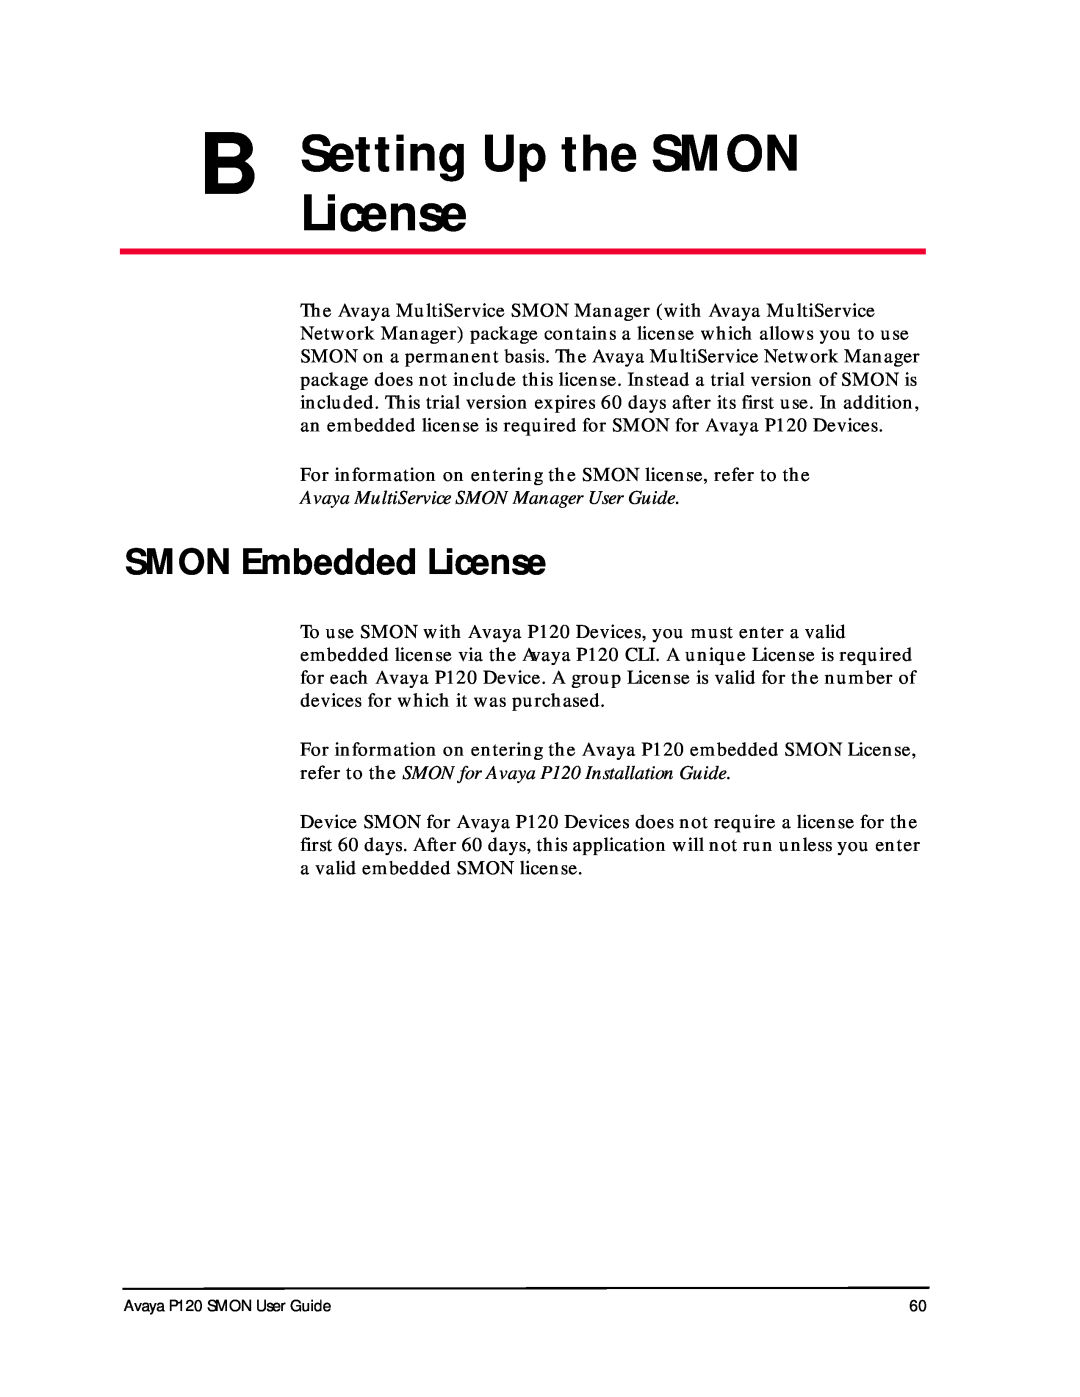 Avaya P120 SMON manual Setting Up the SMON, SMON Embedded License, Avaya MultiService SMON Manager User Guide 